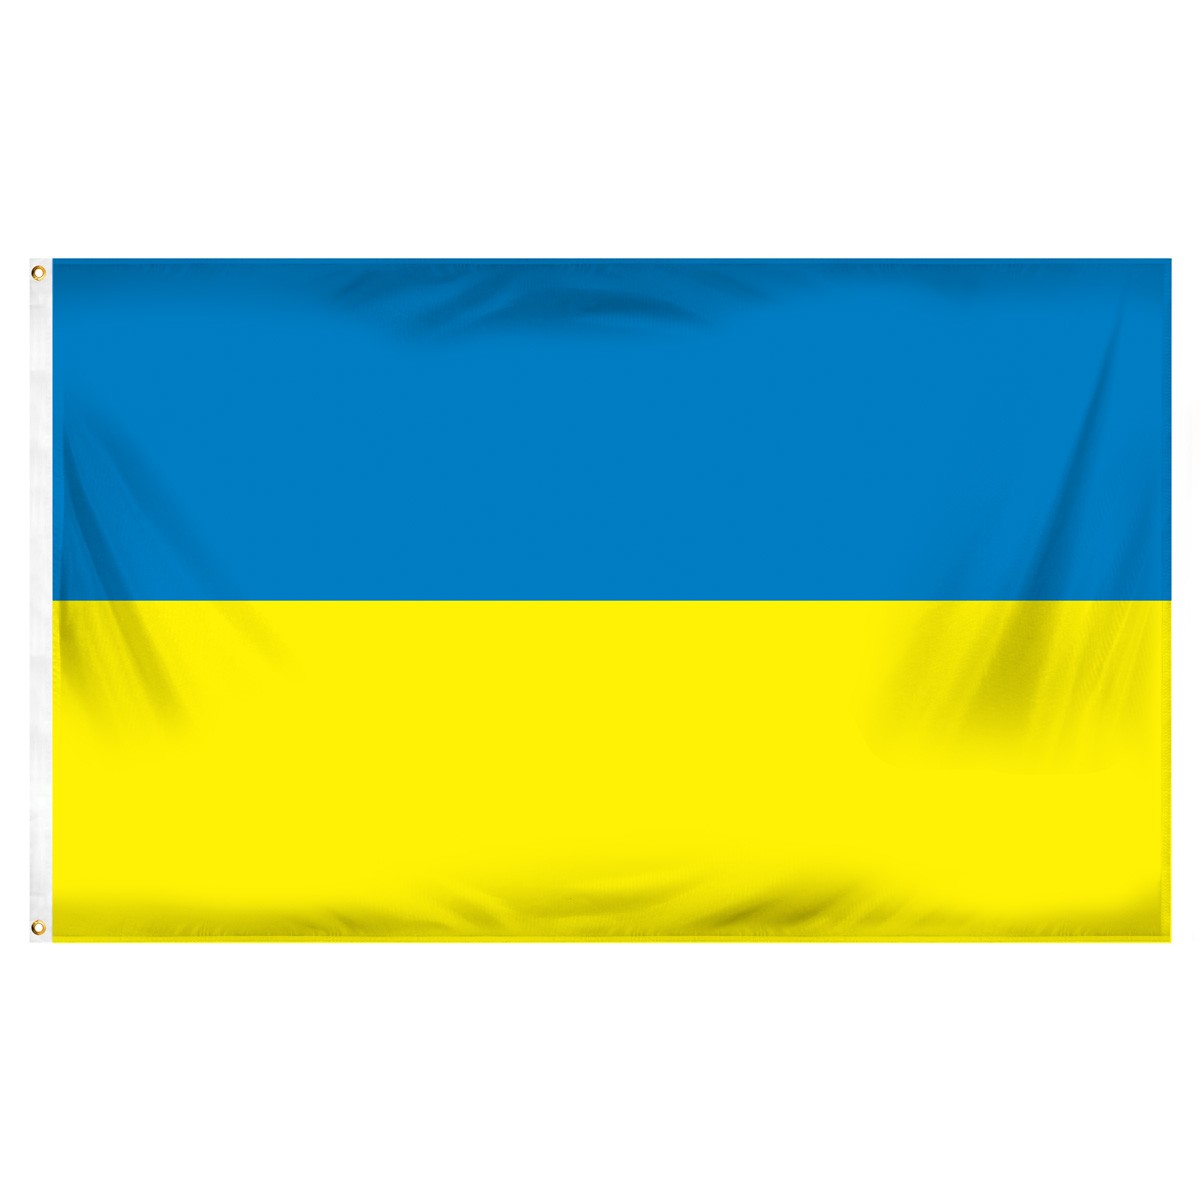 Ukraine Flags and Pennants